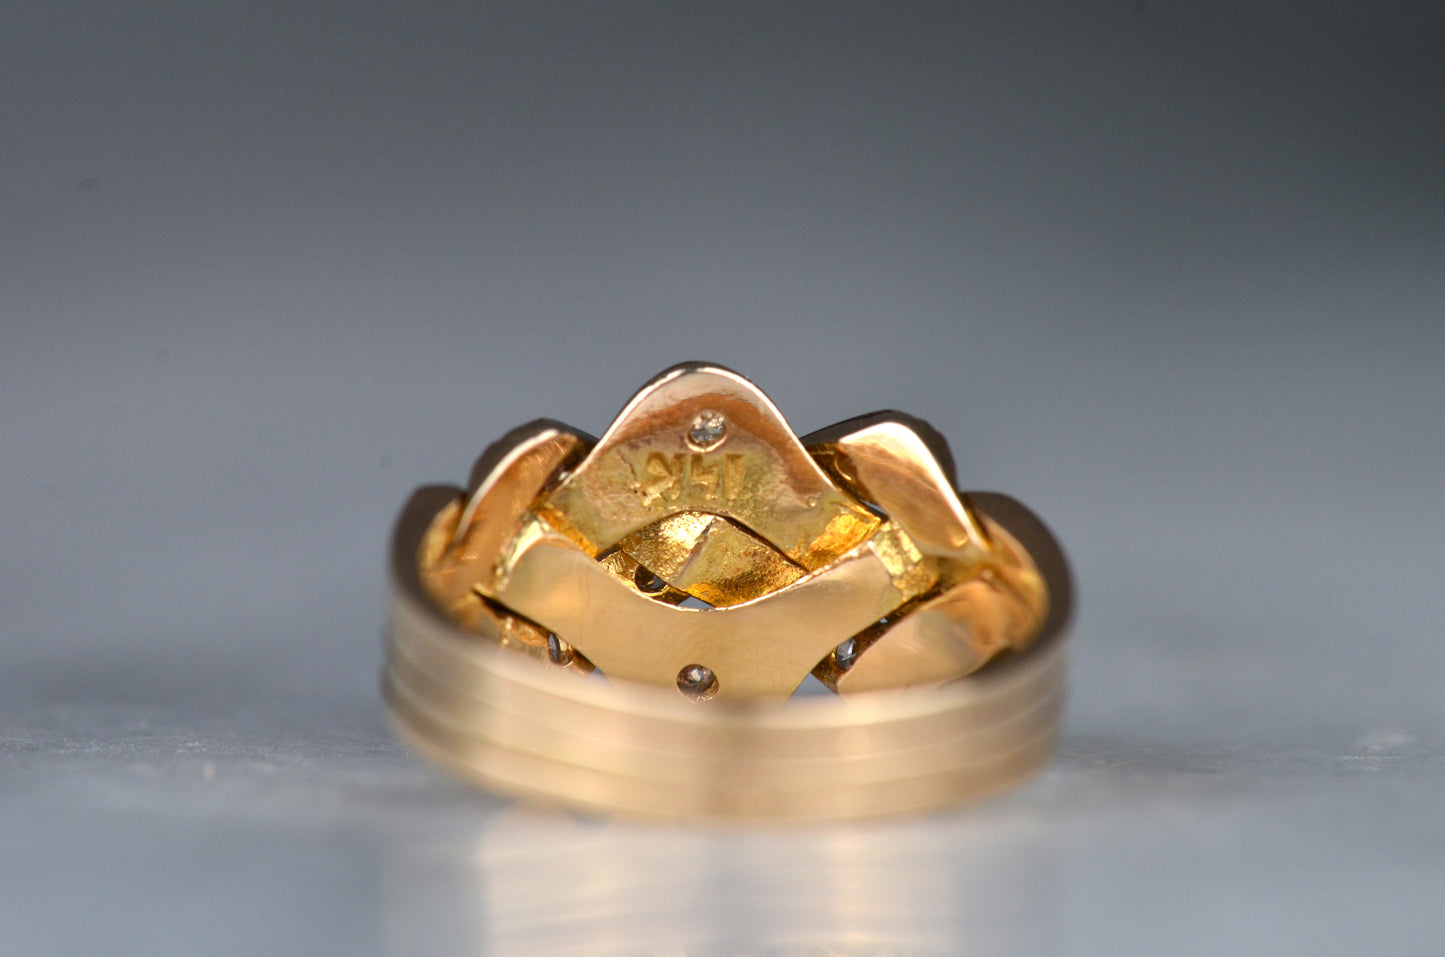 Sparkling Vintage Diamond Puzzle Ring